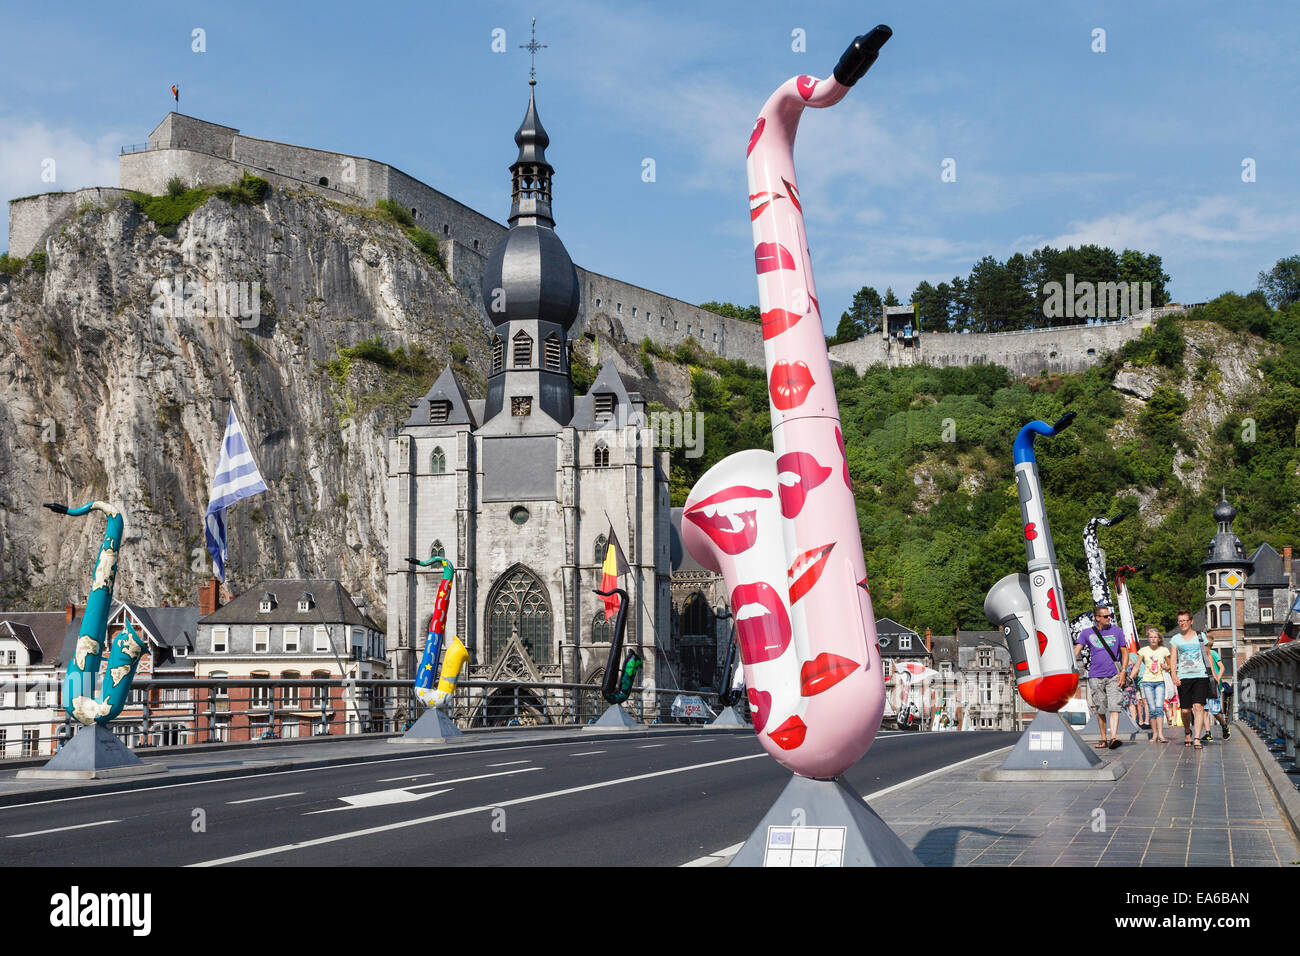 The bridge at Dinant decorated to mark the Sax Bicentennial, Wallonia, Belgium. Stock Photo